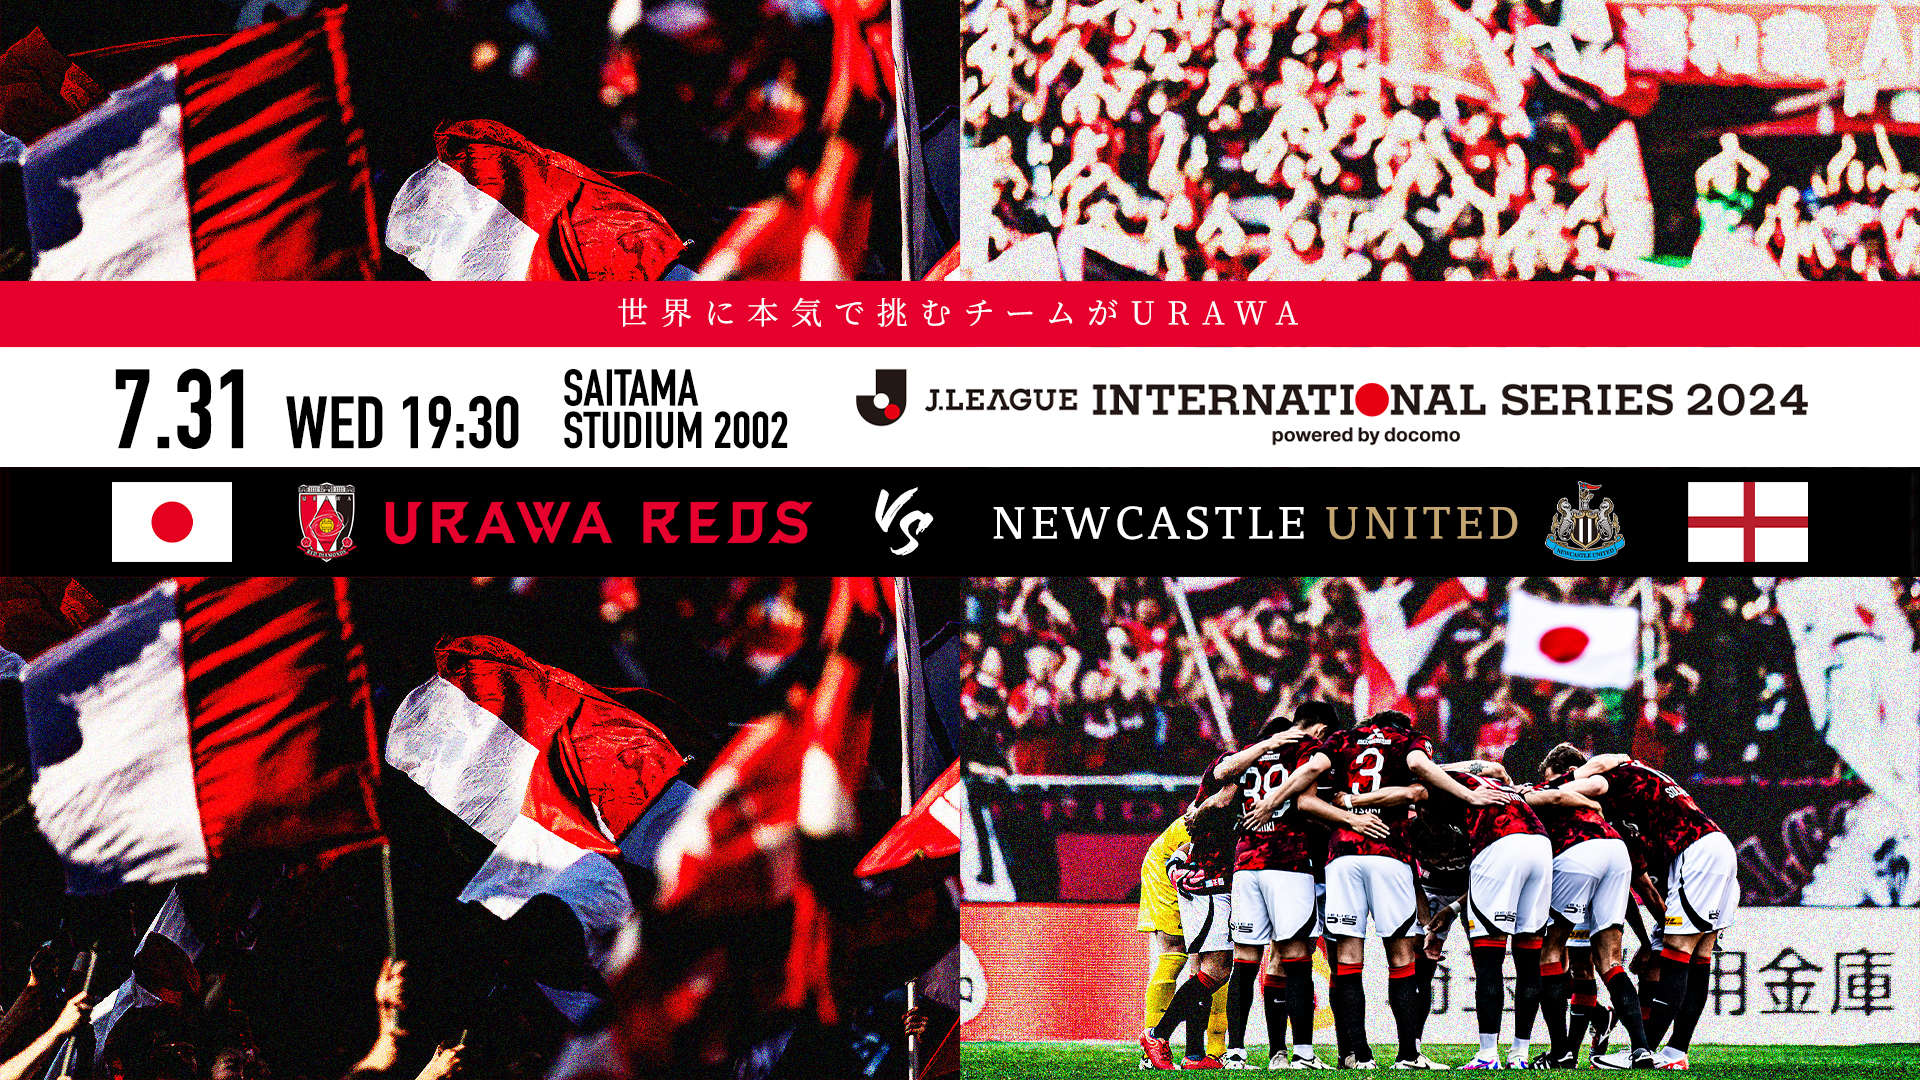 Urawa Reds vs Newcastle United